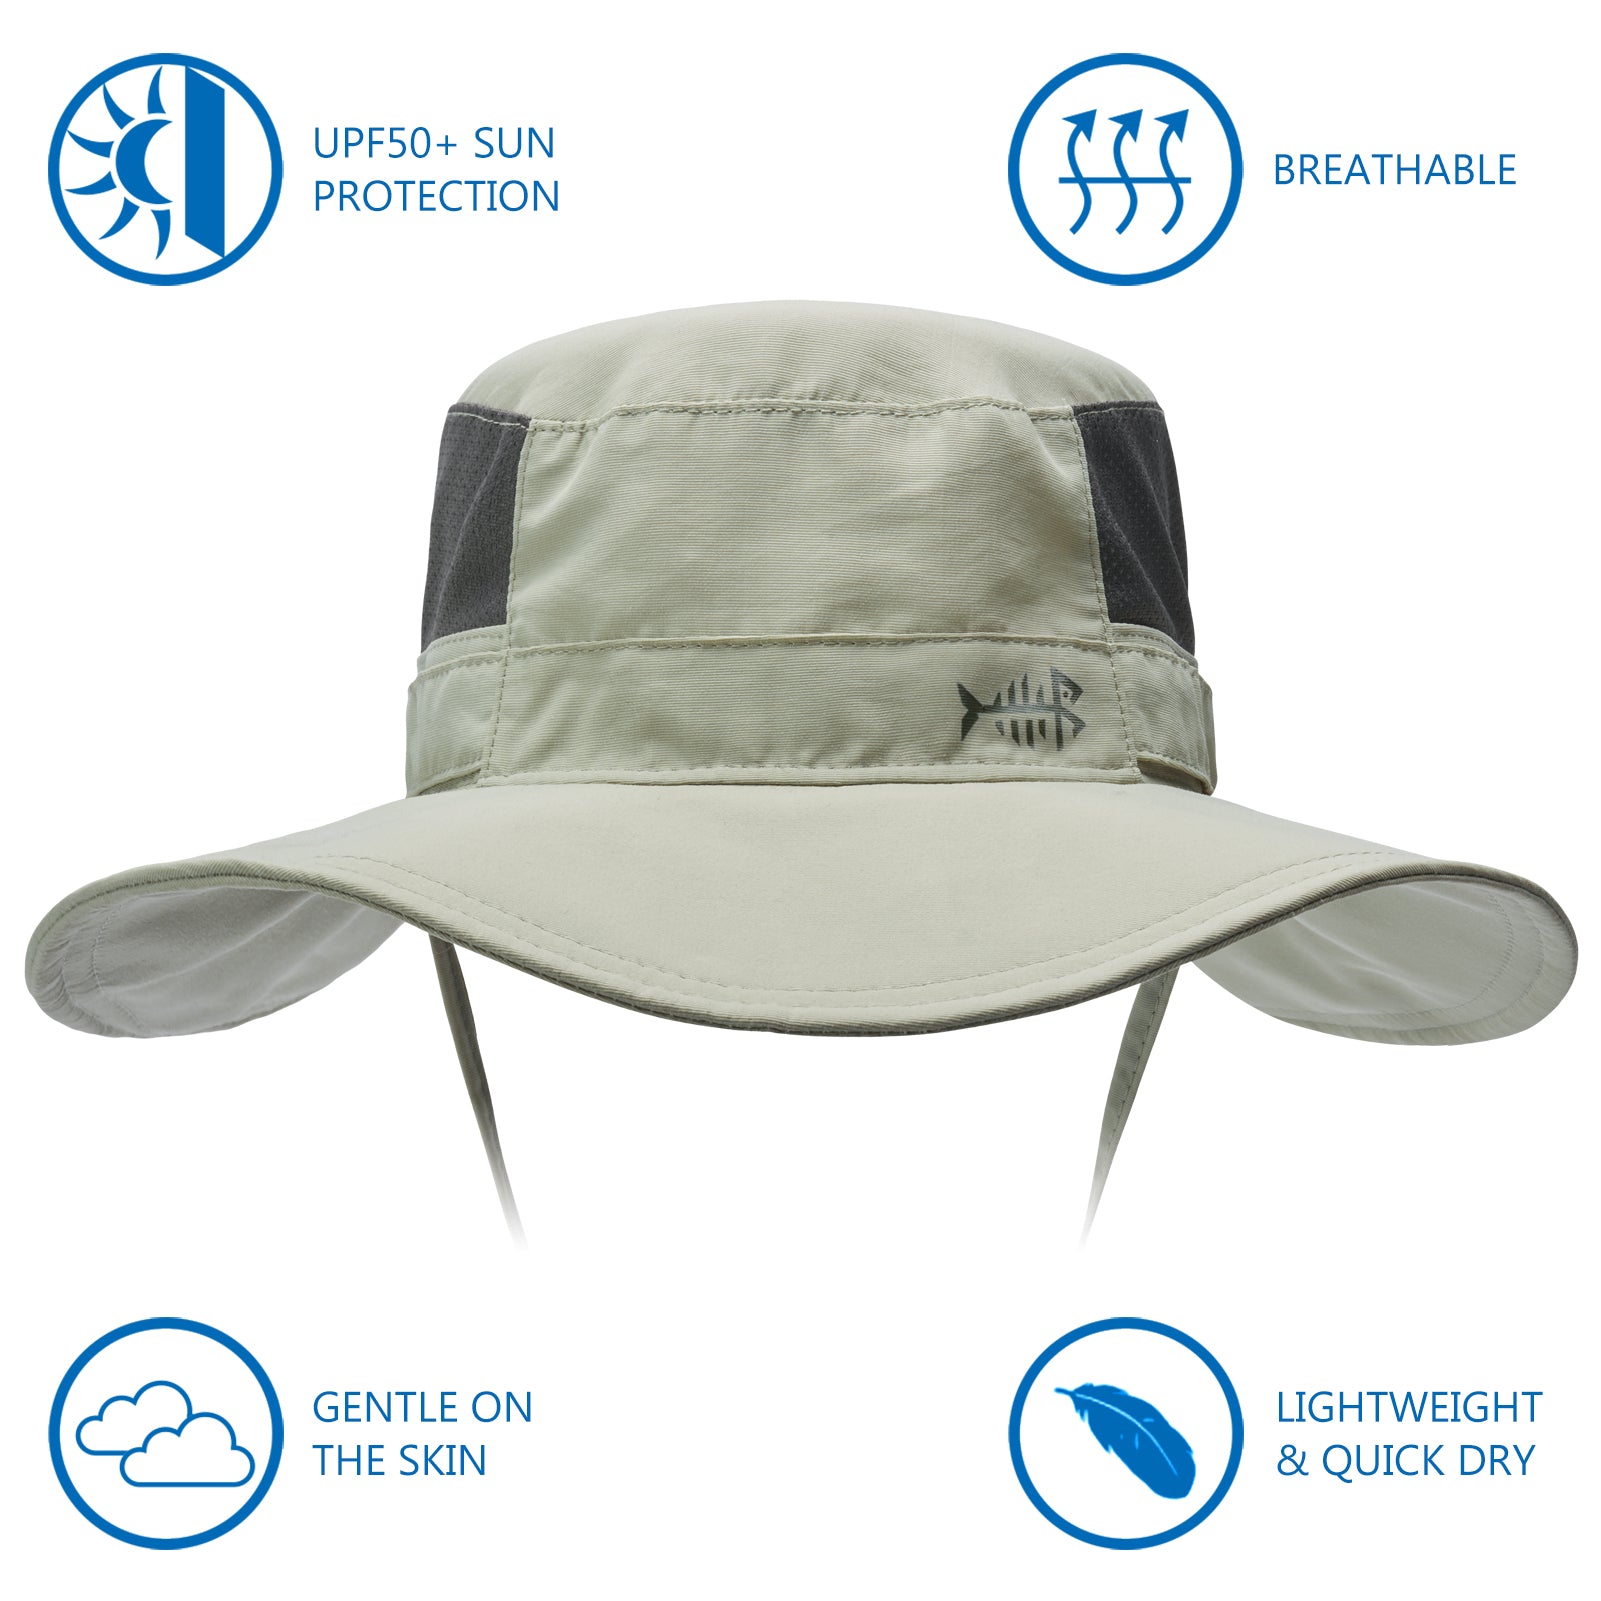 Sun Hats Cover Neck, Cap Covers Neck, Neck Flap Cap, Sun Cap Caps